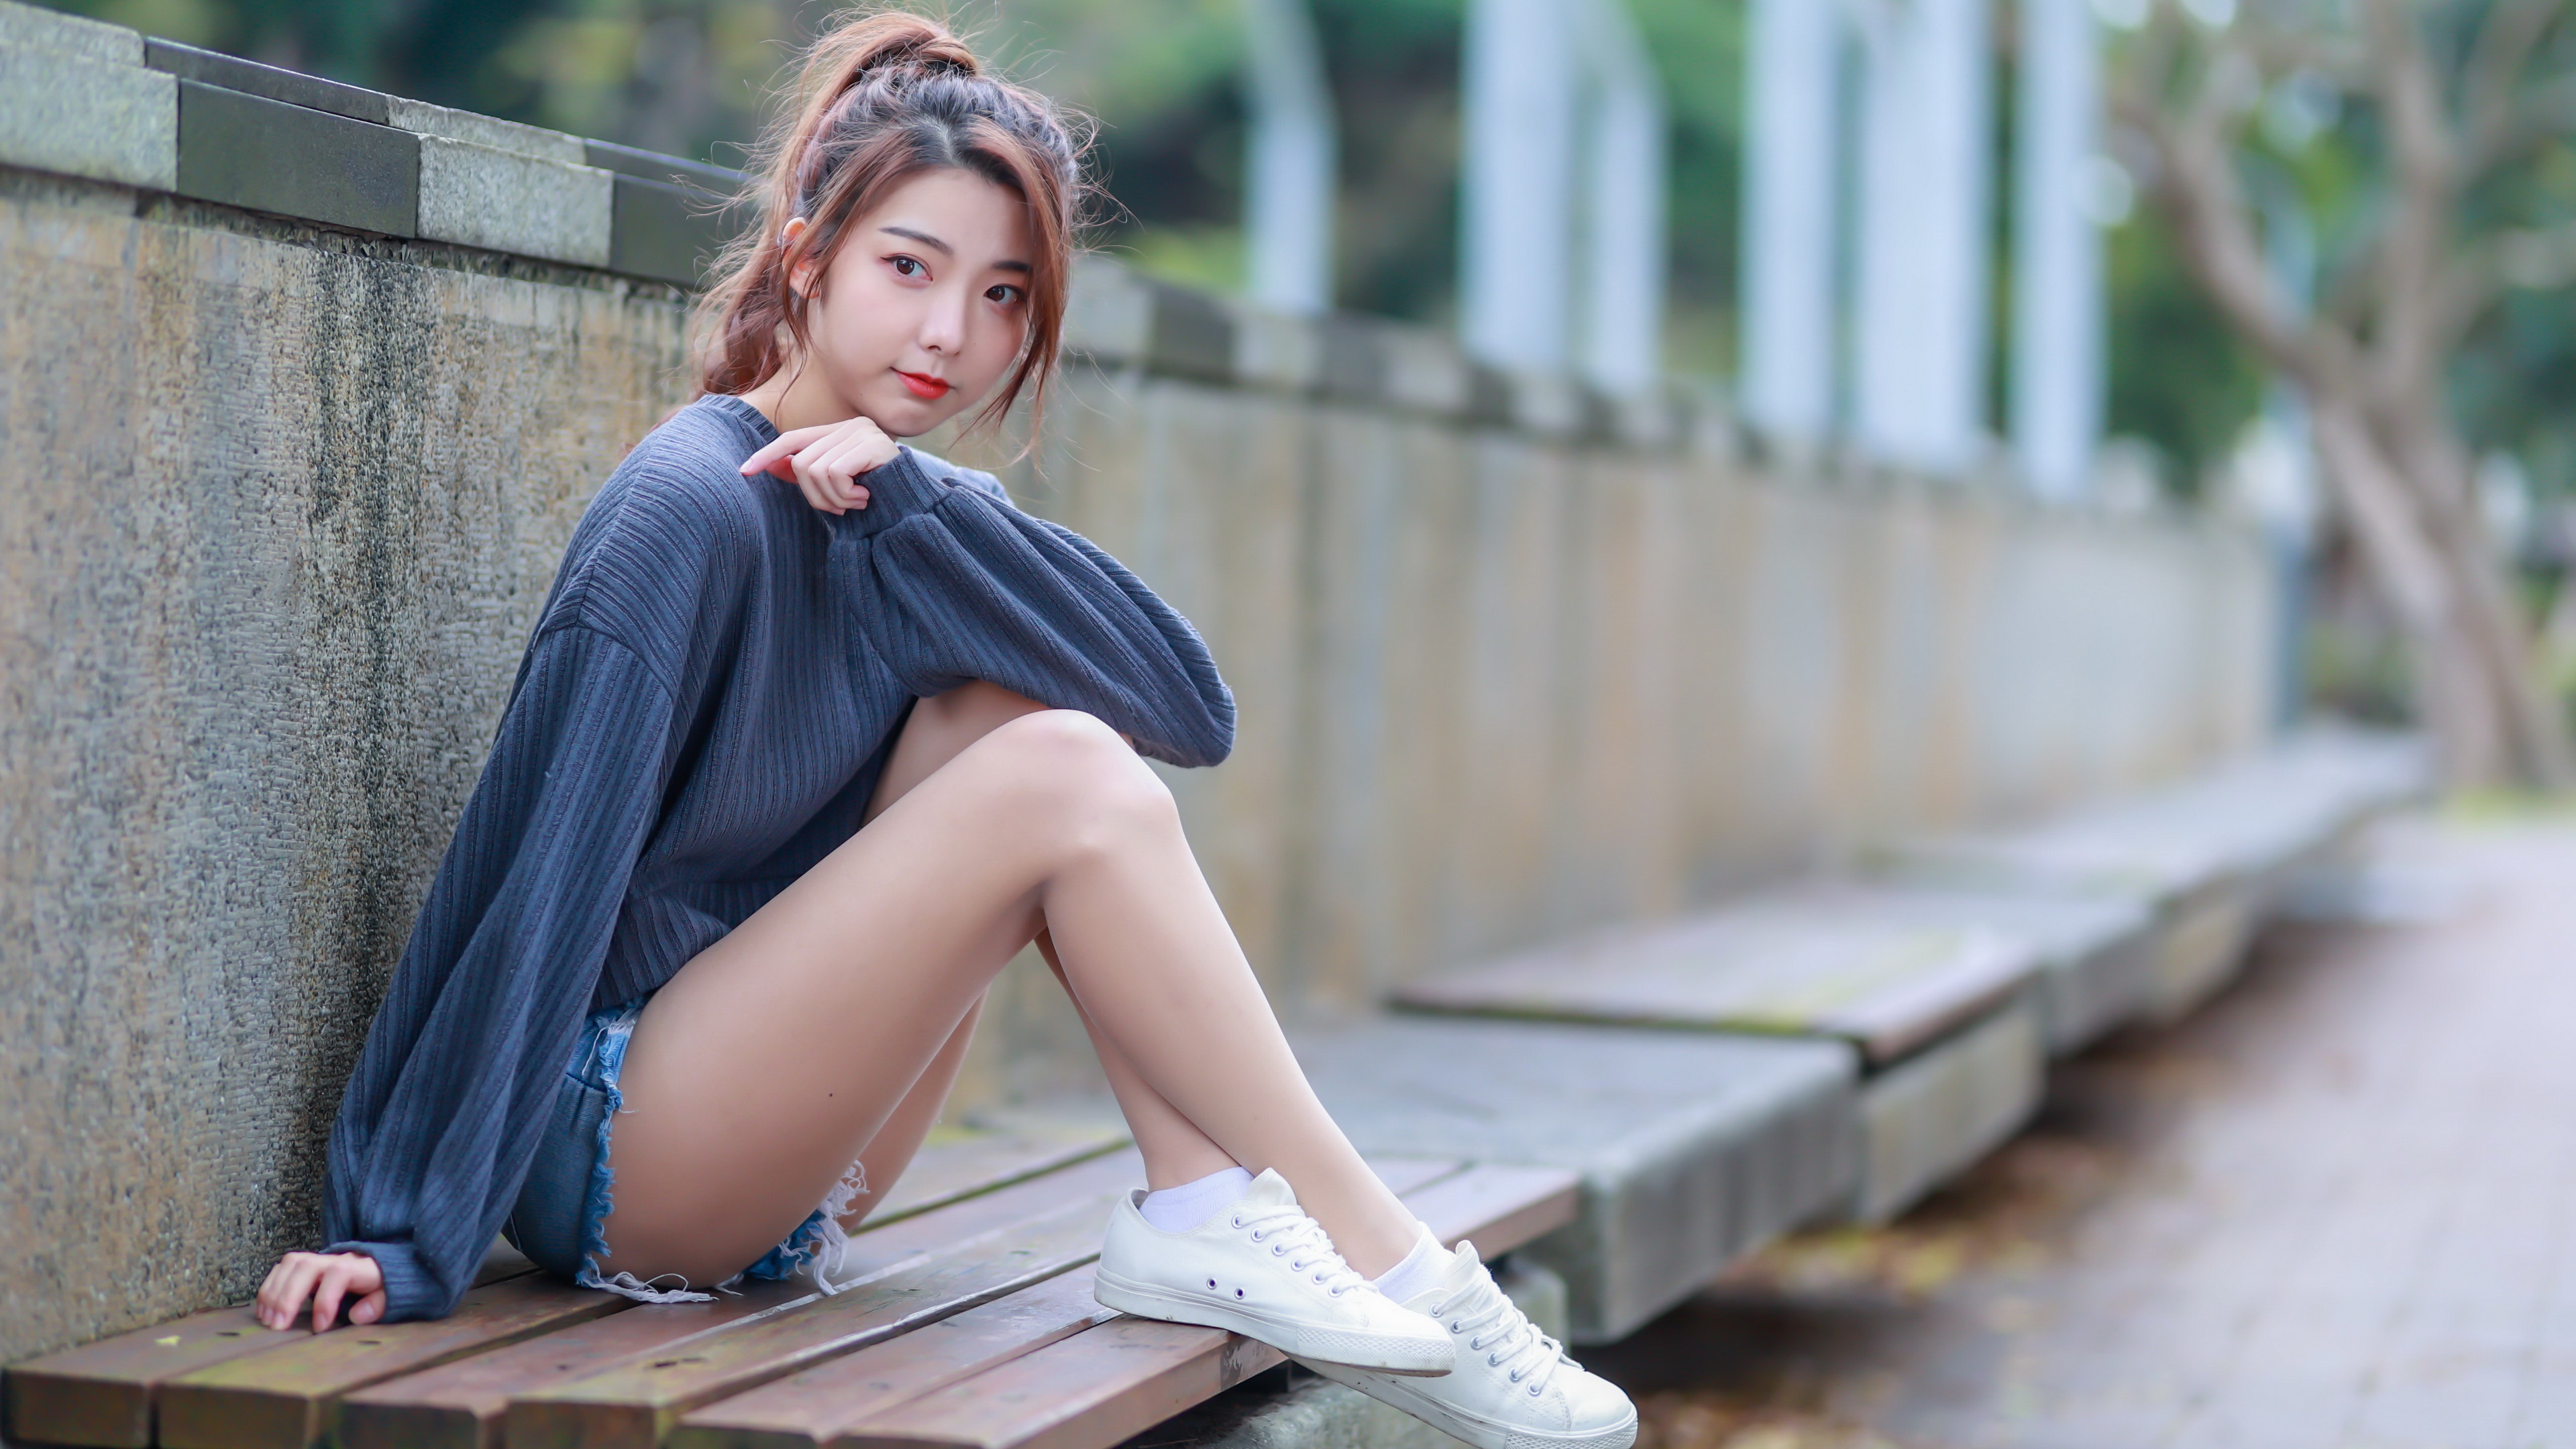 Asian Model Women Outdoors Outdoors Sitting Makeup Red Lipstick Sweater Blue Sweater Legs White Shoe 3840x2160